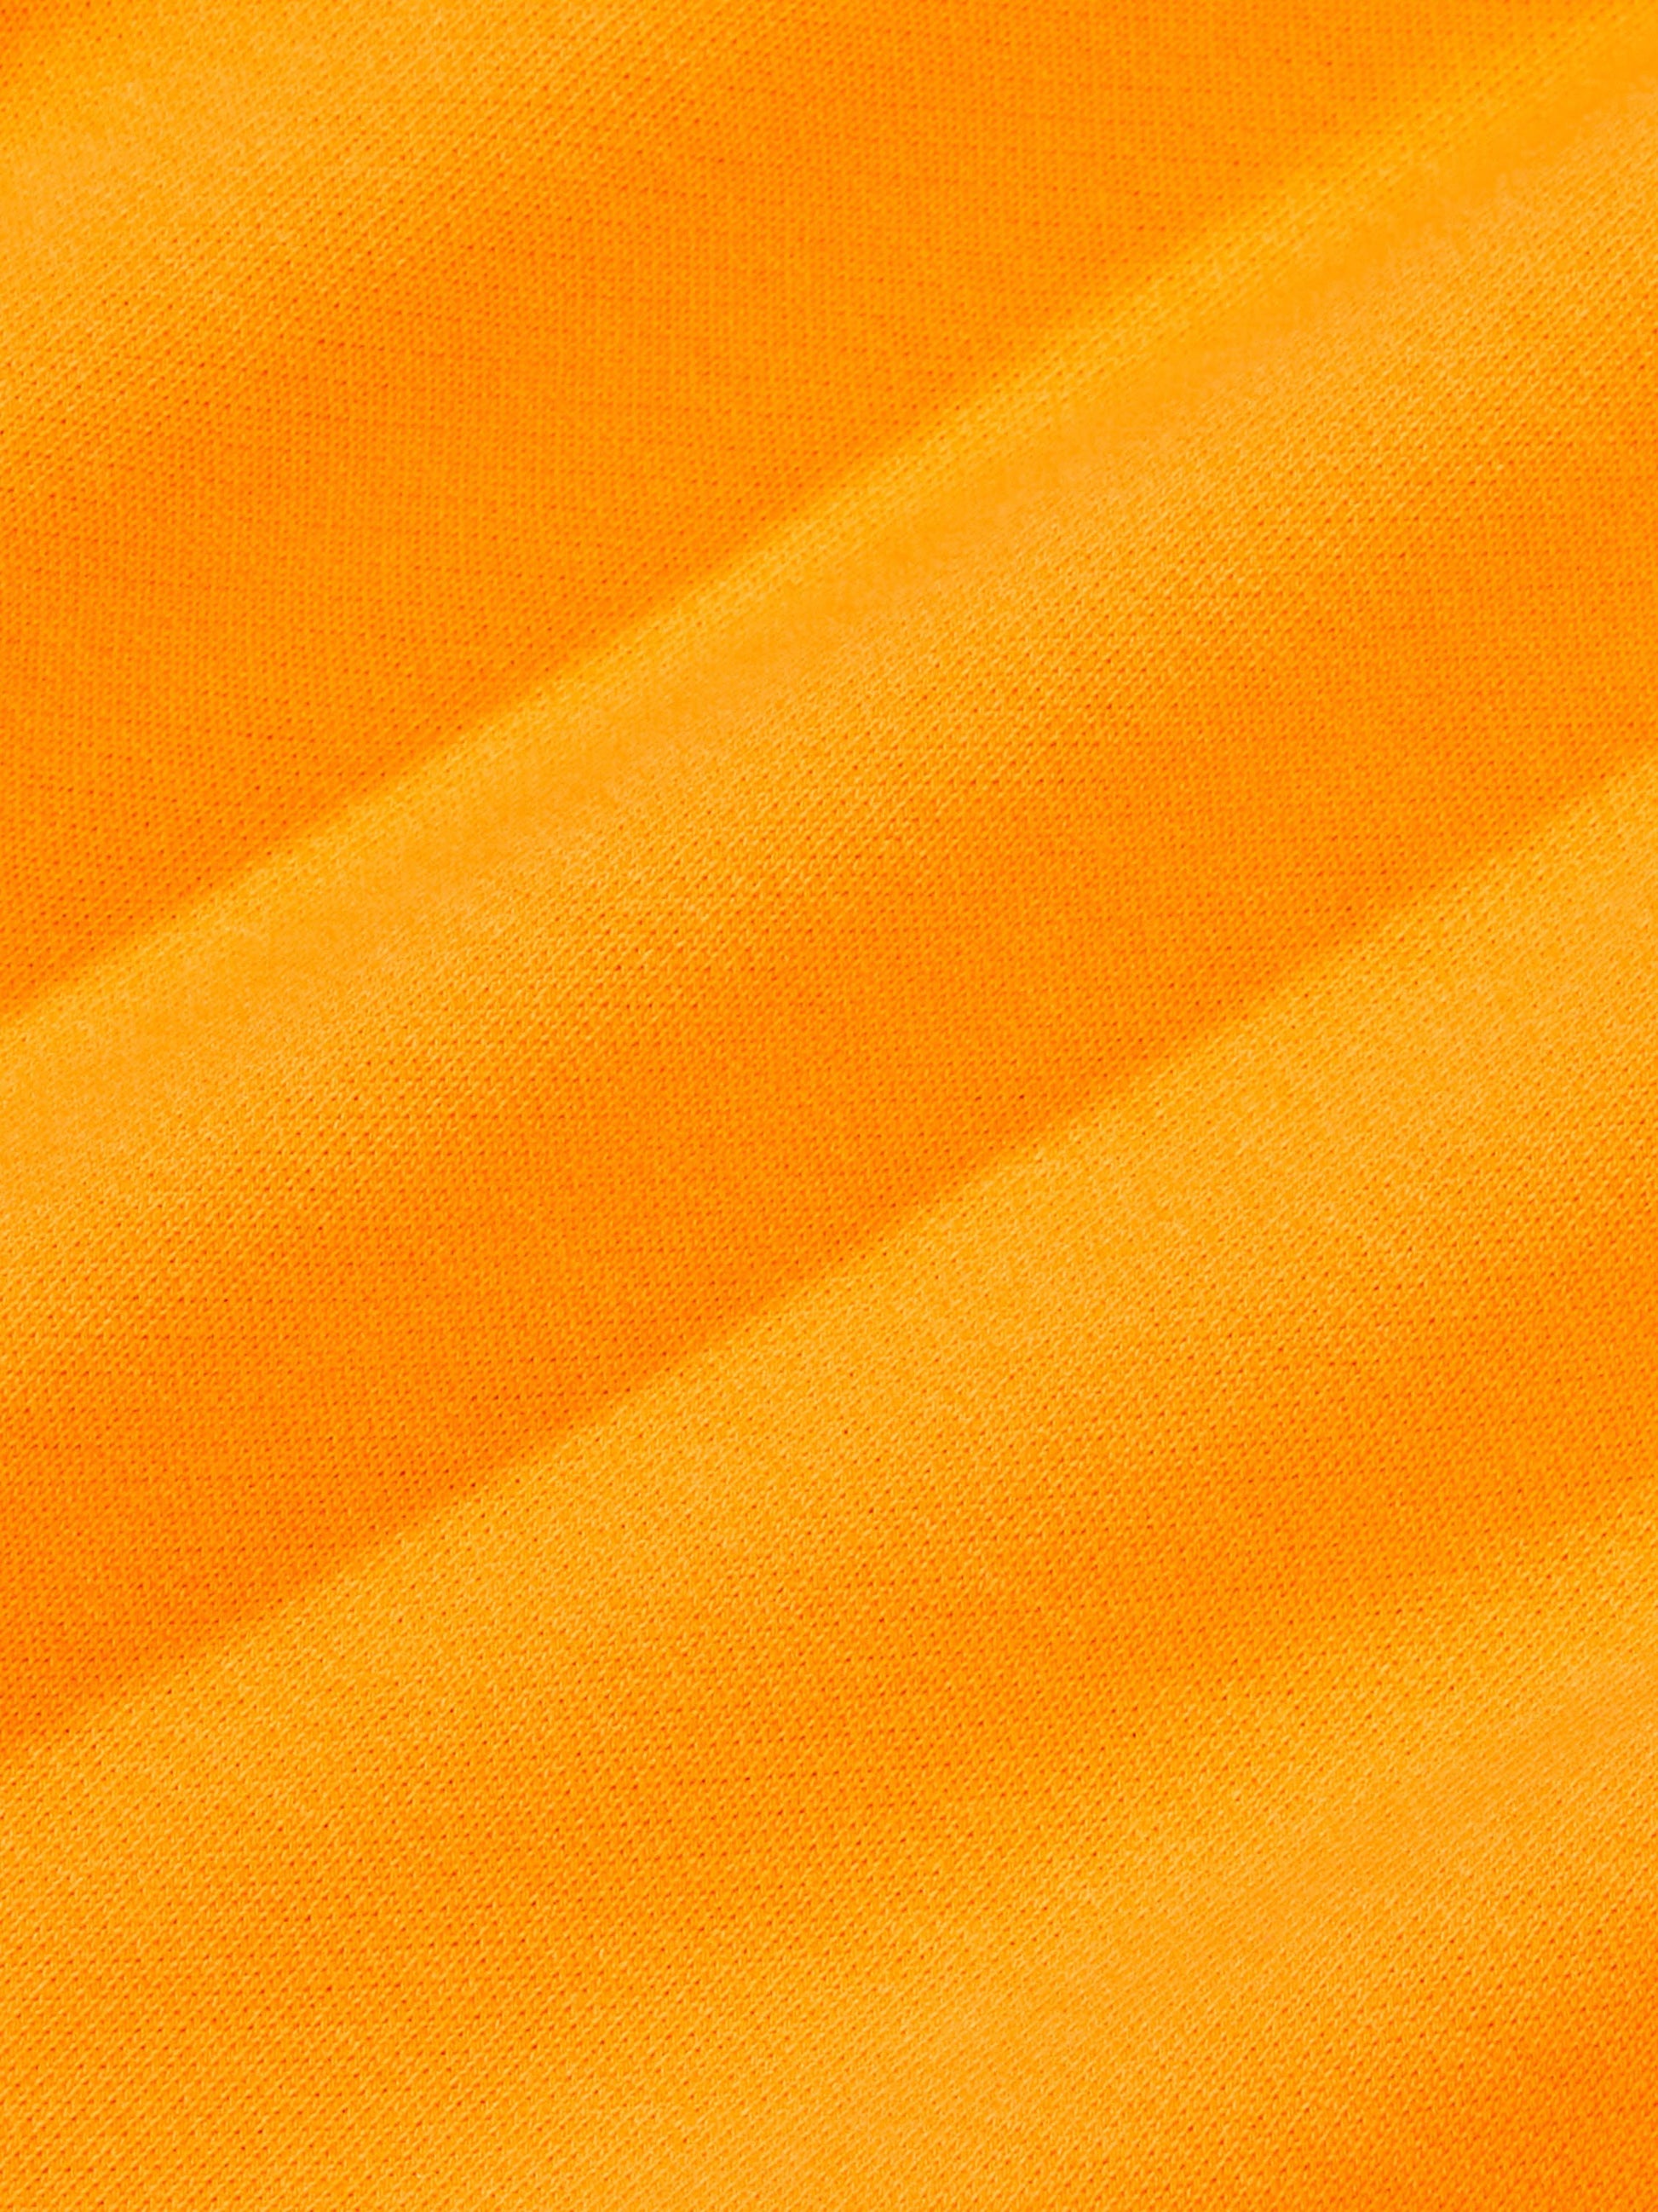 365-Summer-Fruits-Shorts-Tangerine-material